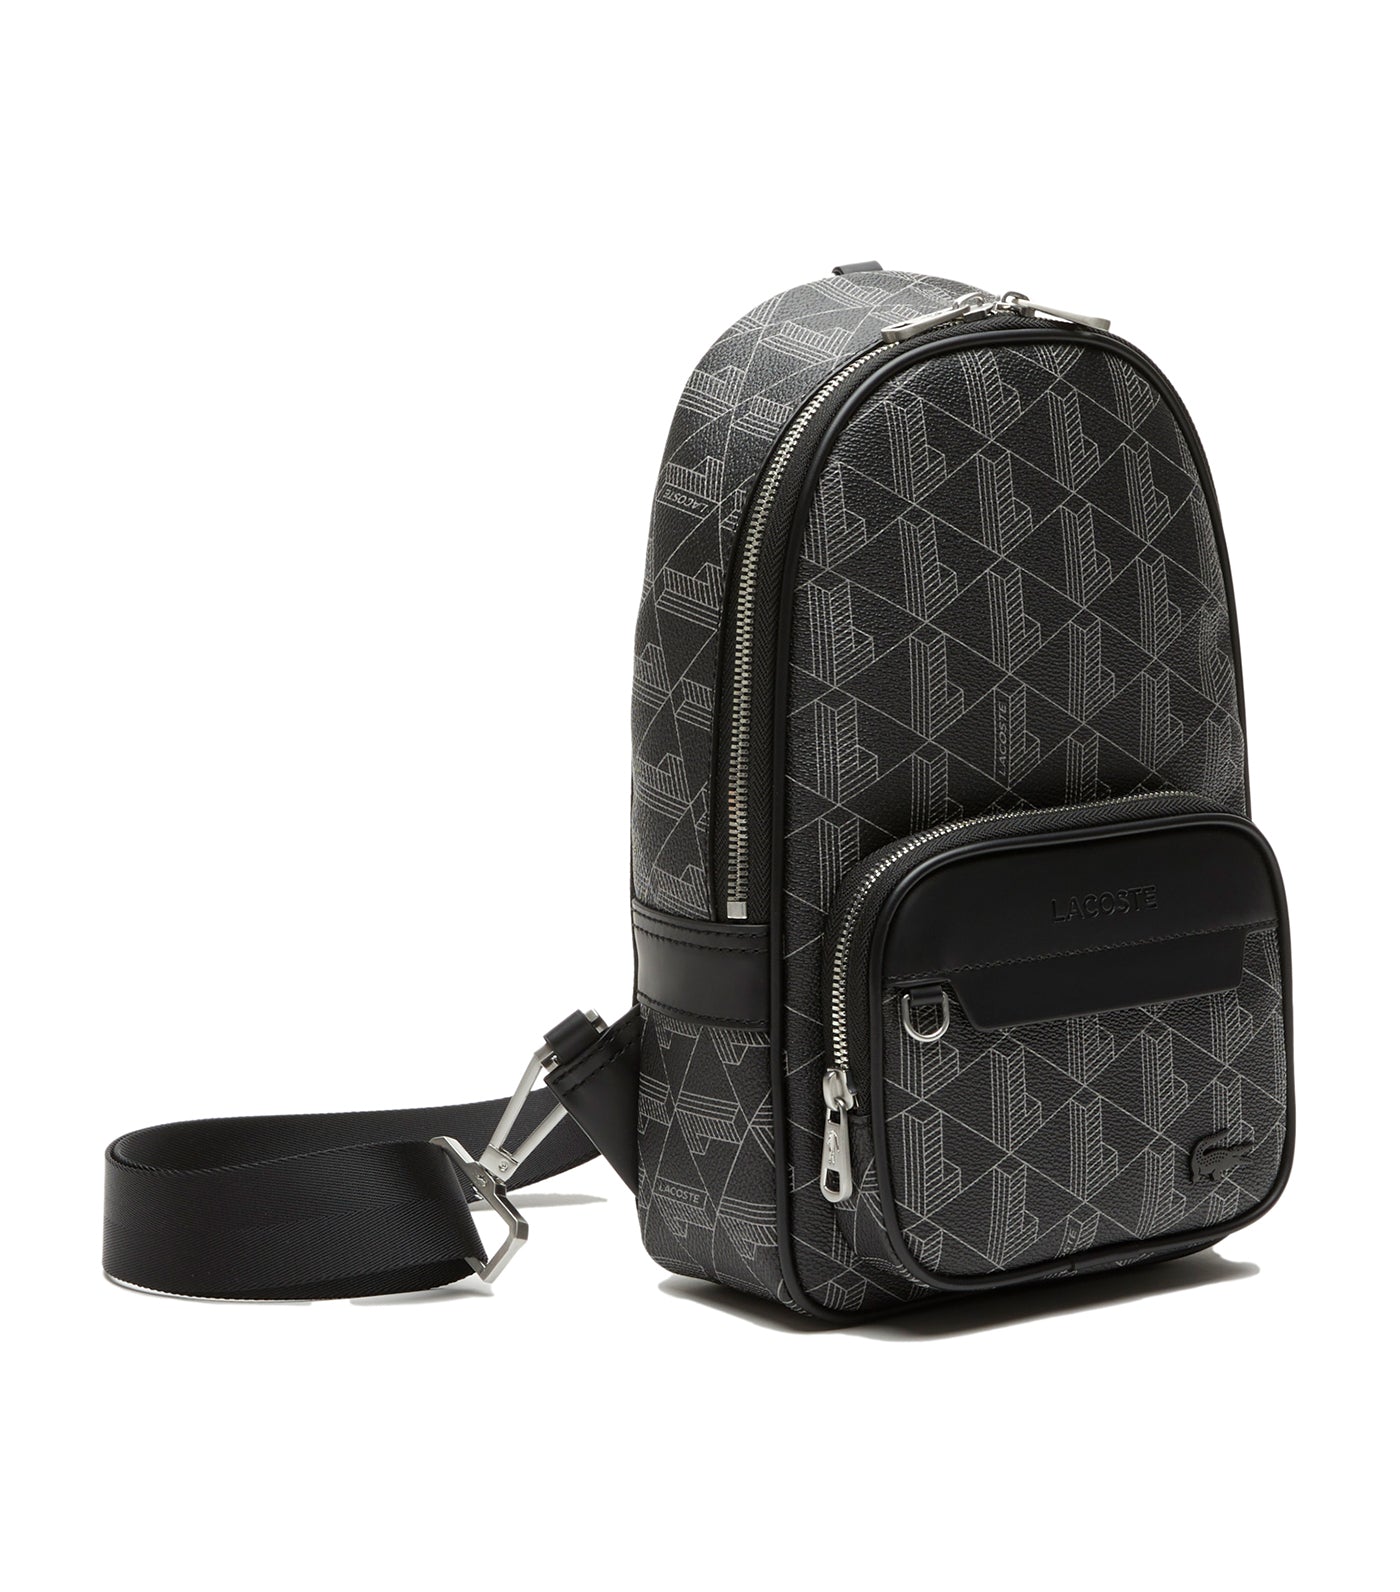 Lacoste Crossover Bag Canvas S FLAT - BLACK, Men's Fashion, Bags